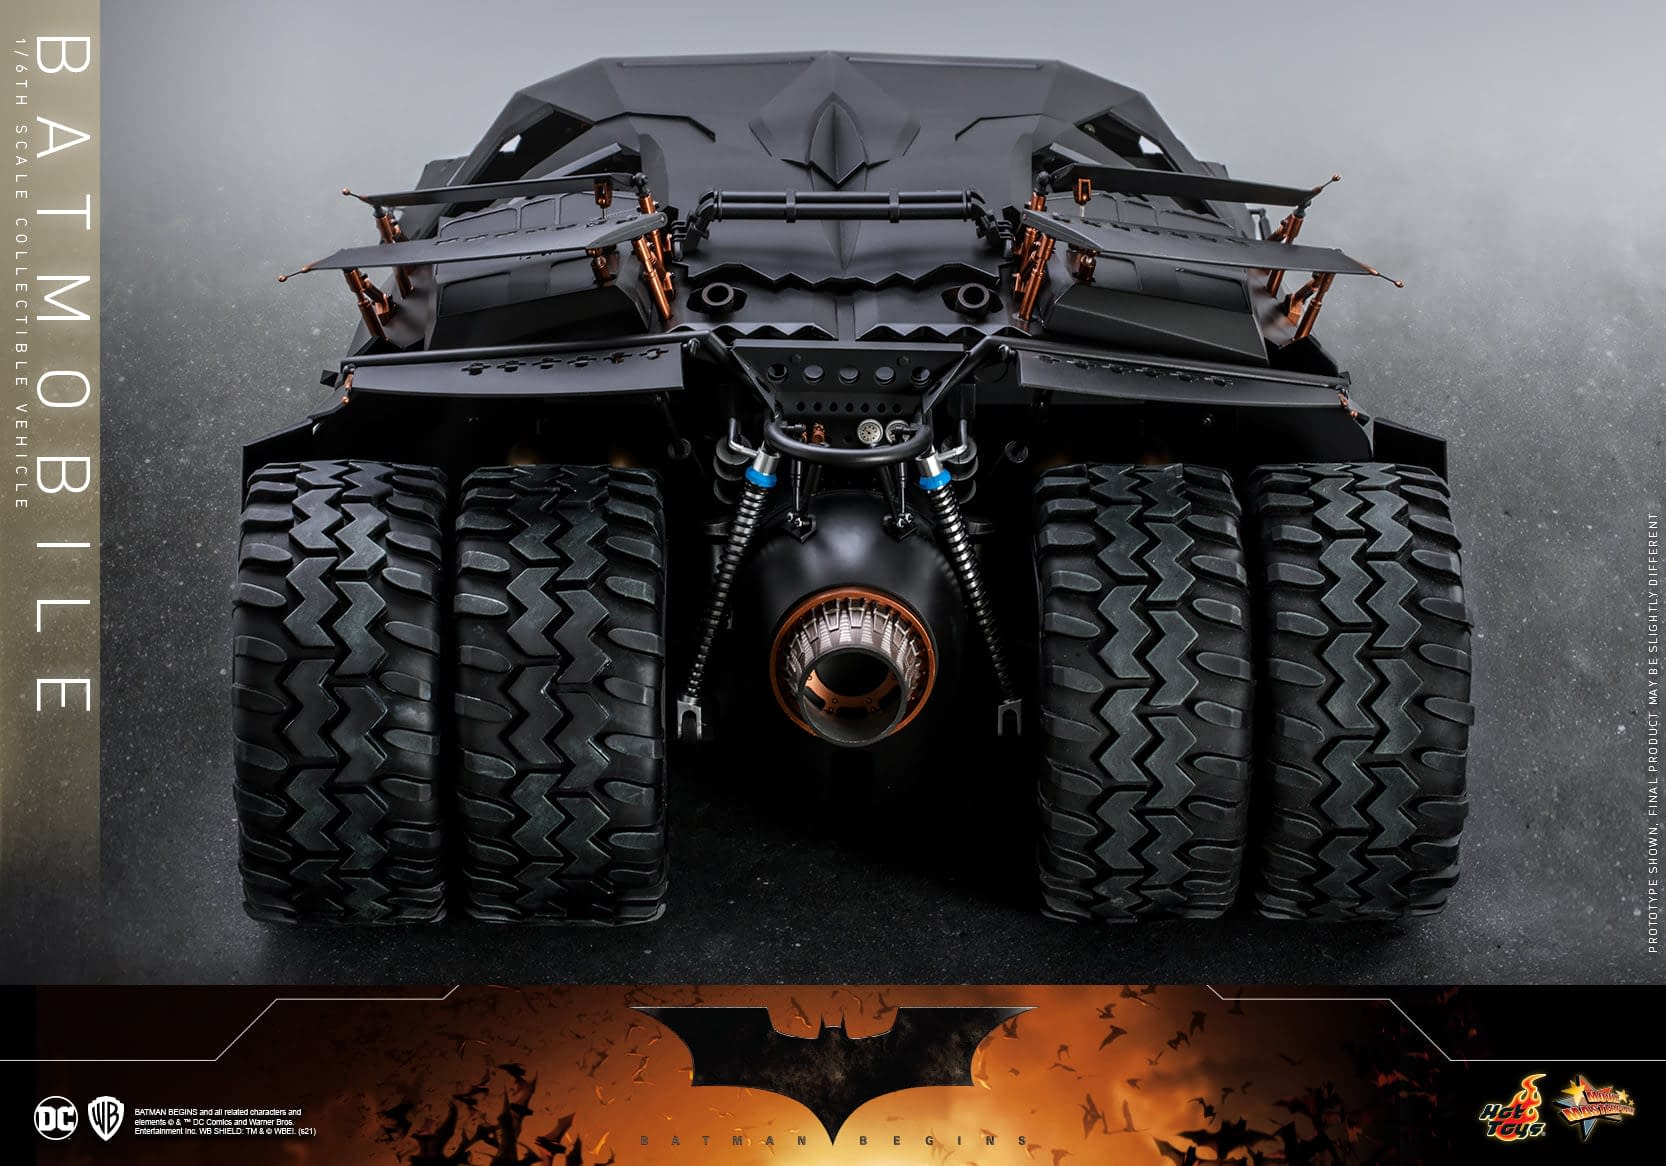 Hot Toys Debuts New Vehicle With Batman Begins Batmobile Tumbler